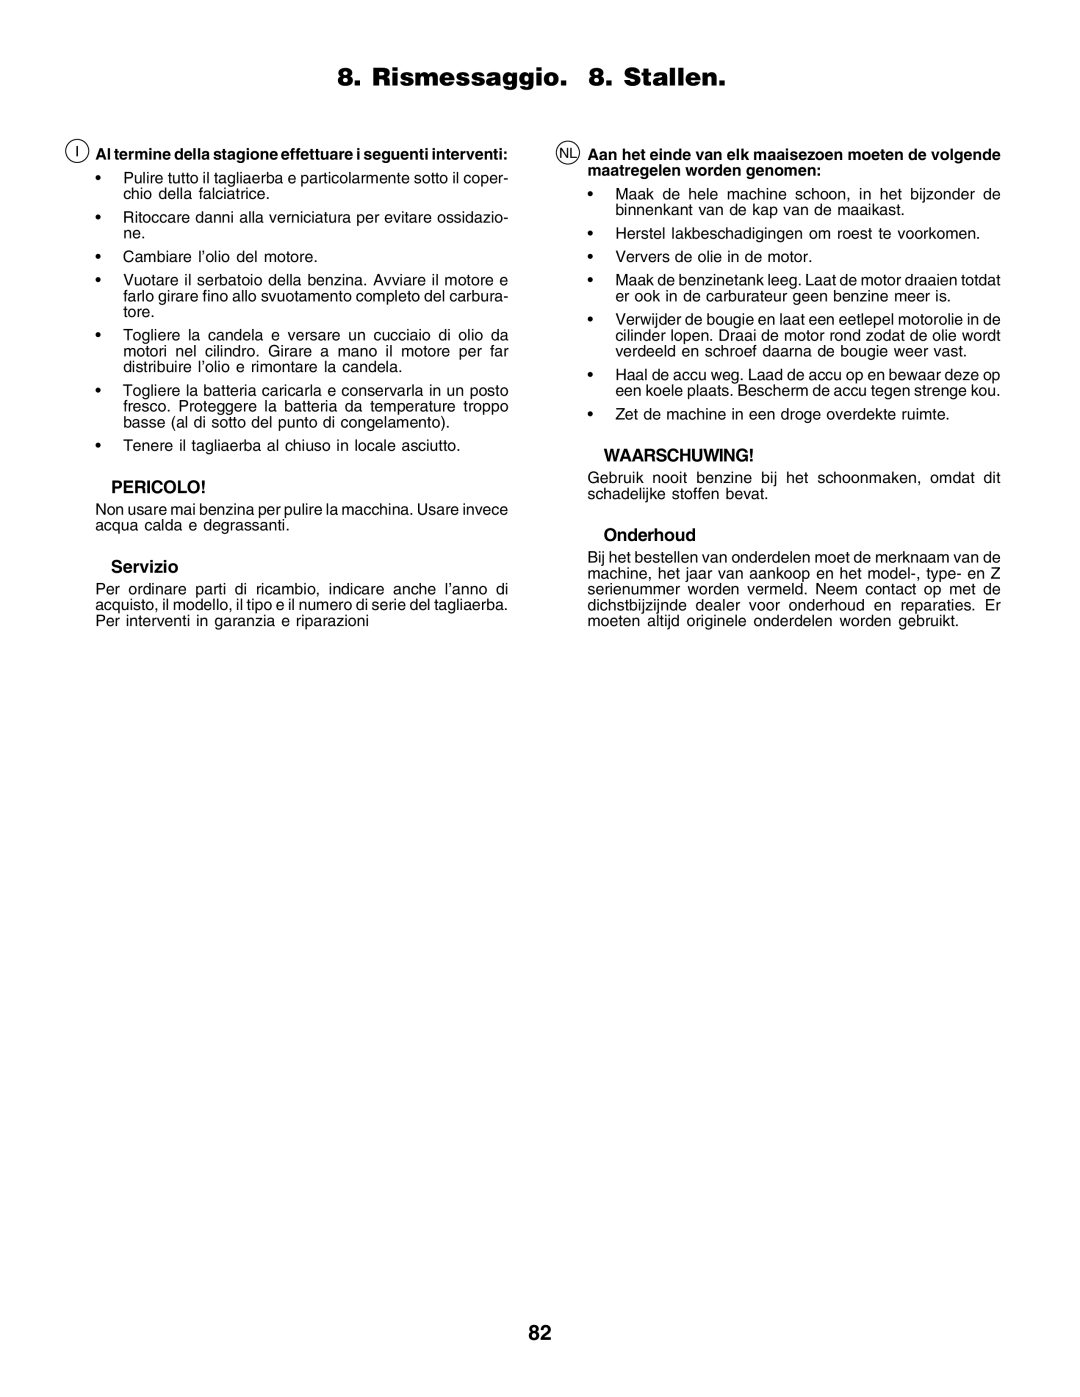 Husqvarna CT135 instruction manual Rismessaggio. 8. Stallen, Pericolo, Servizio, Waarschuwing, Onderhoud 